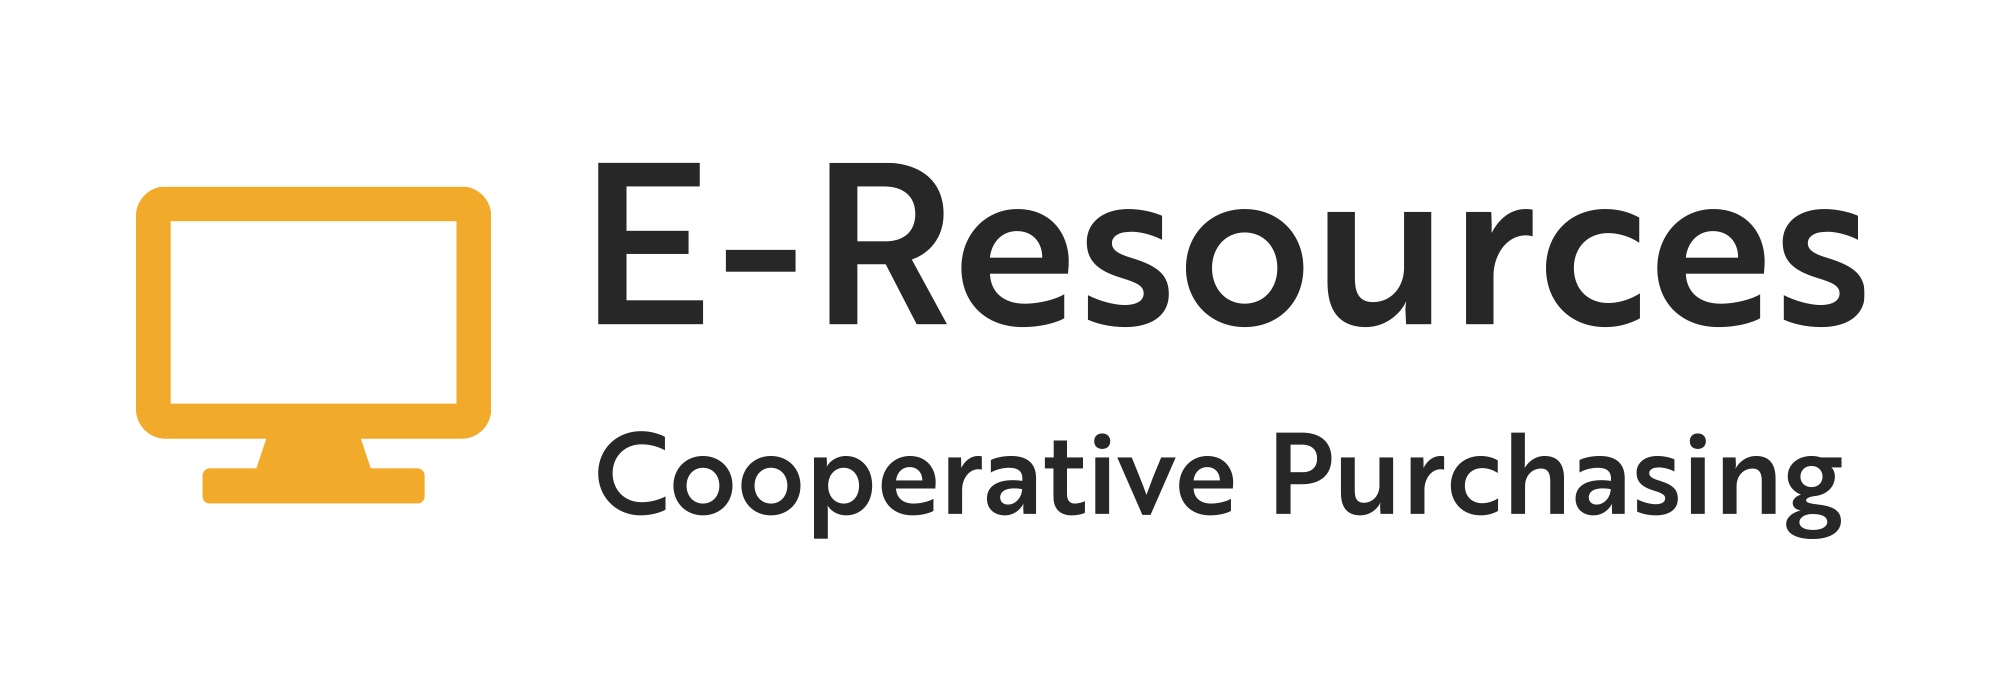 E-Resources: Cooperative Purchasing logo.